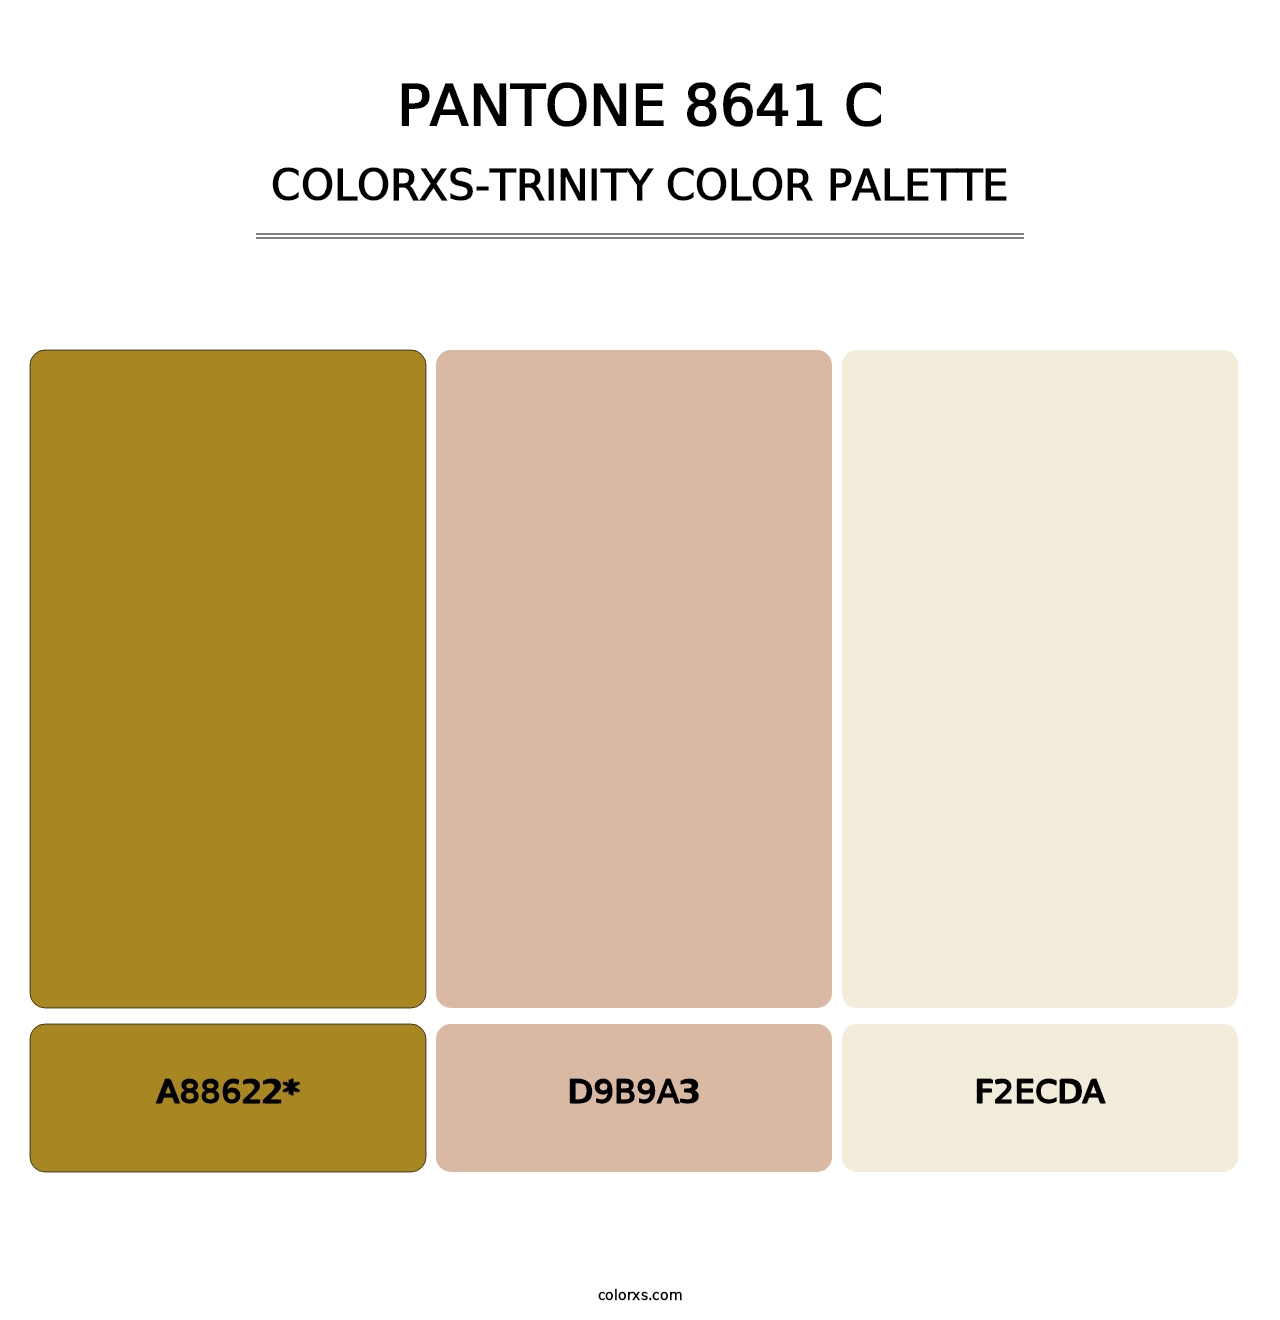 PANTONE 8641 C - Colorxs Trinity Palette